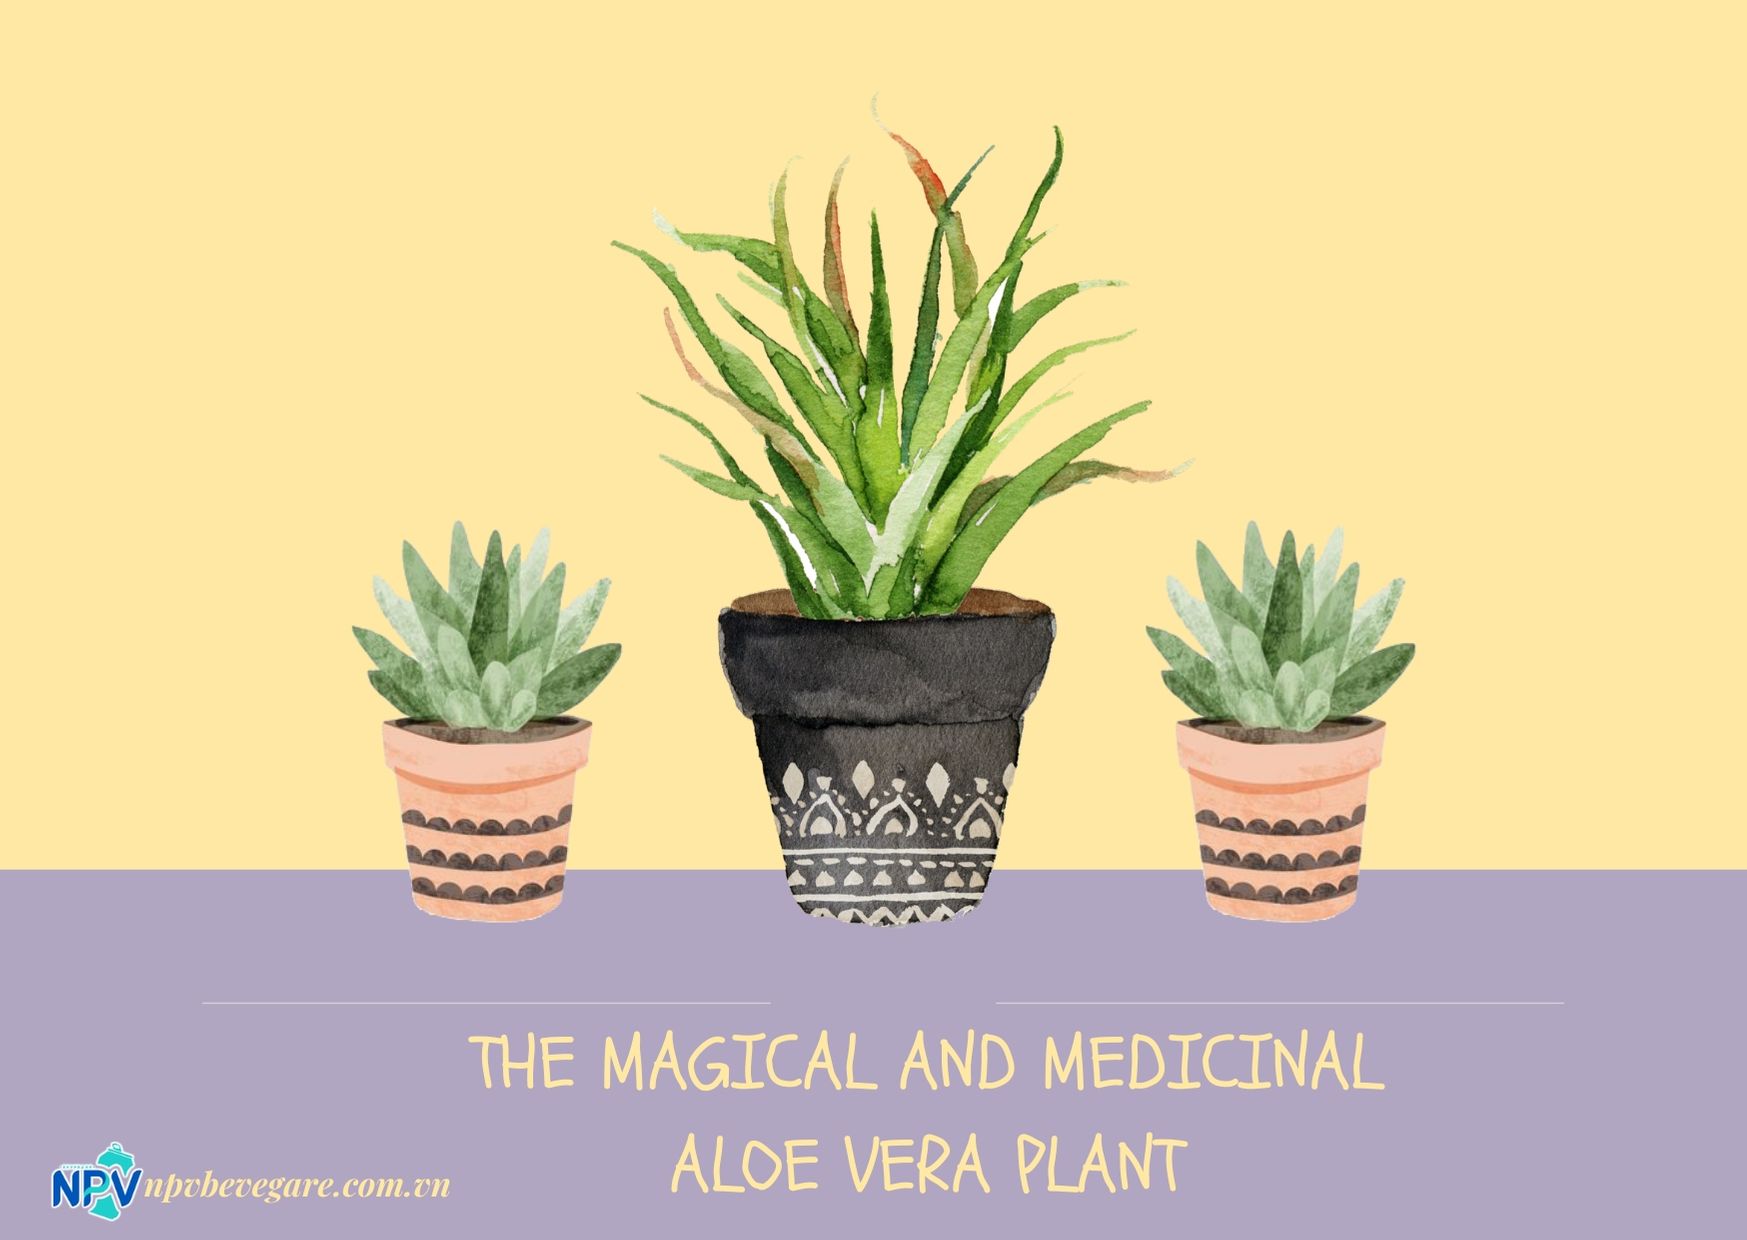 Aloe vera is magical and medicinal plant